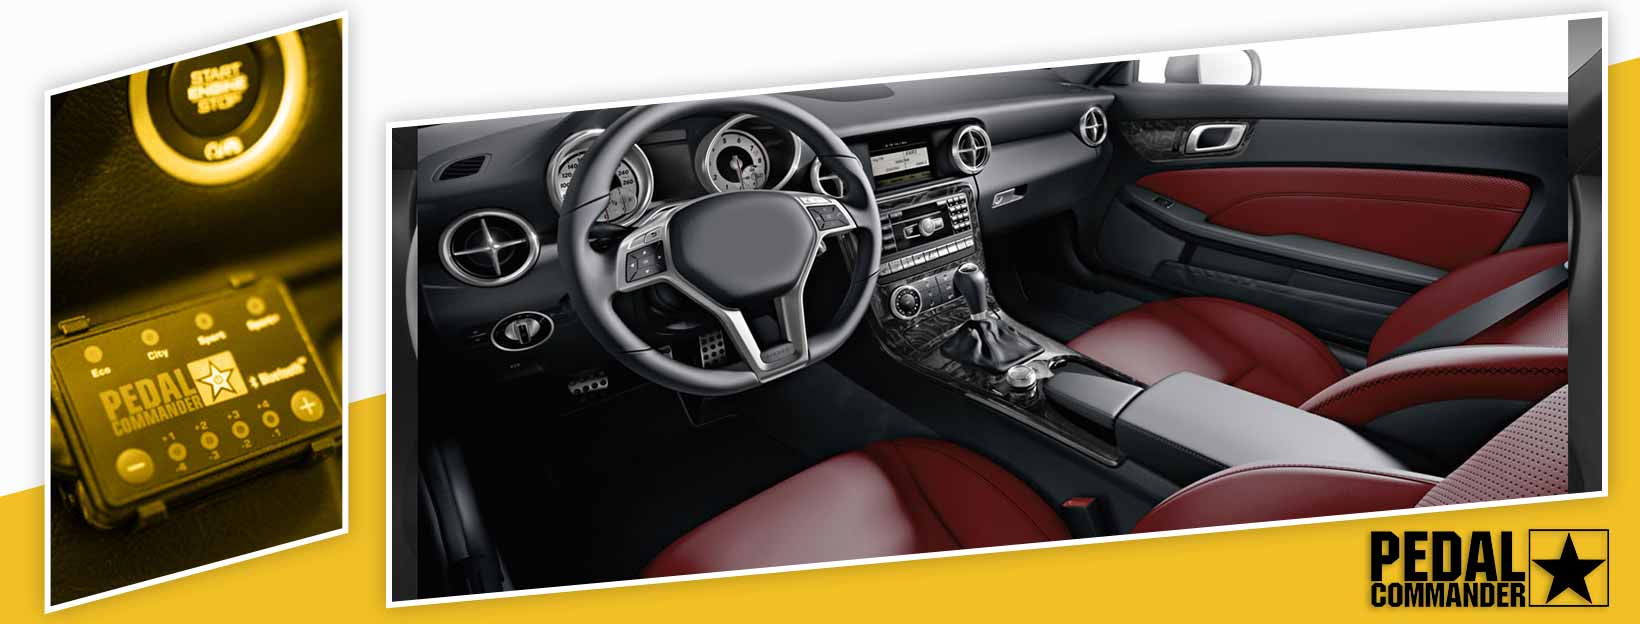 Pedal Commander for Mercedes SLK Class - interior